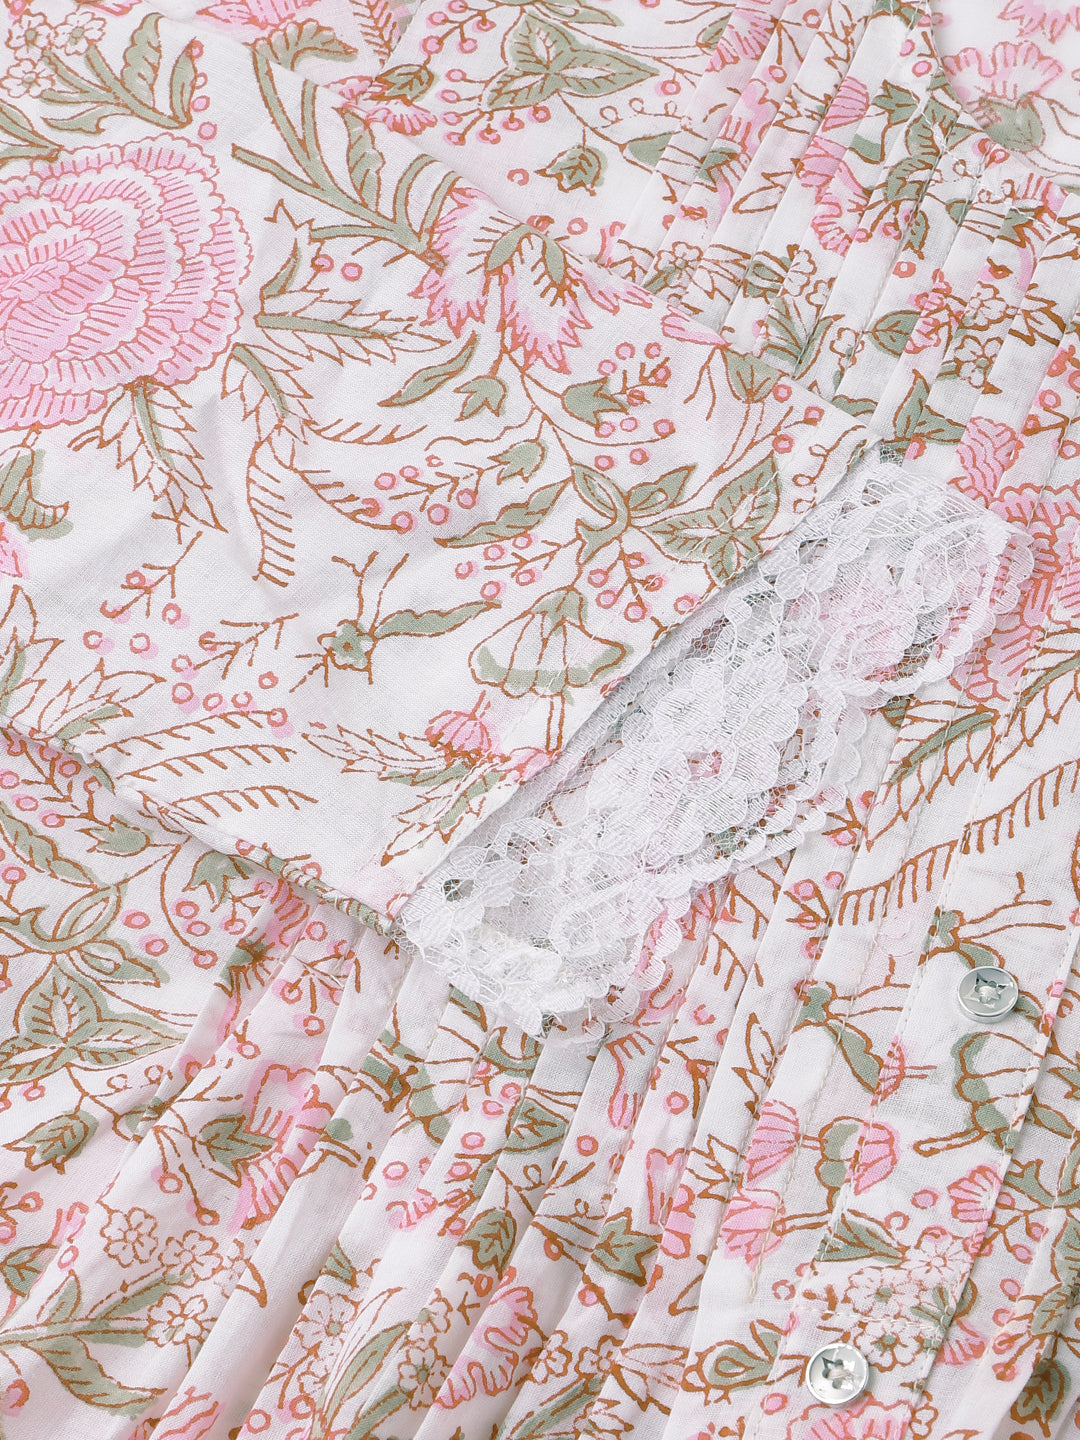 Divena Pink Floral Print Cotton Peplum Top with Pintuck Detailing